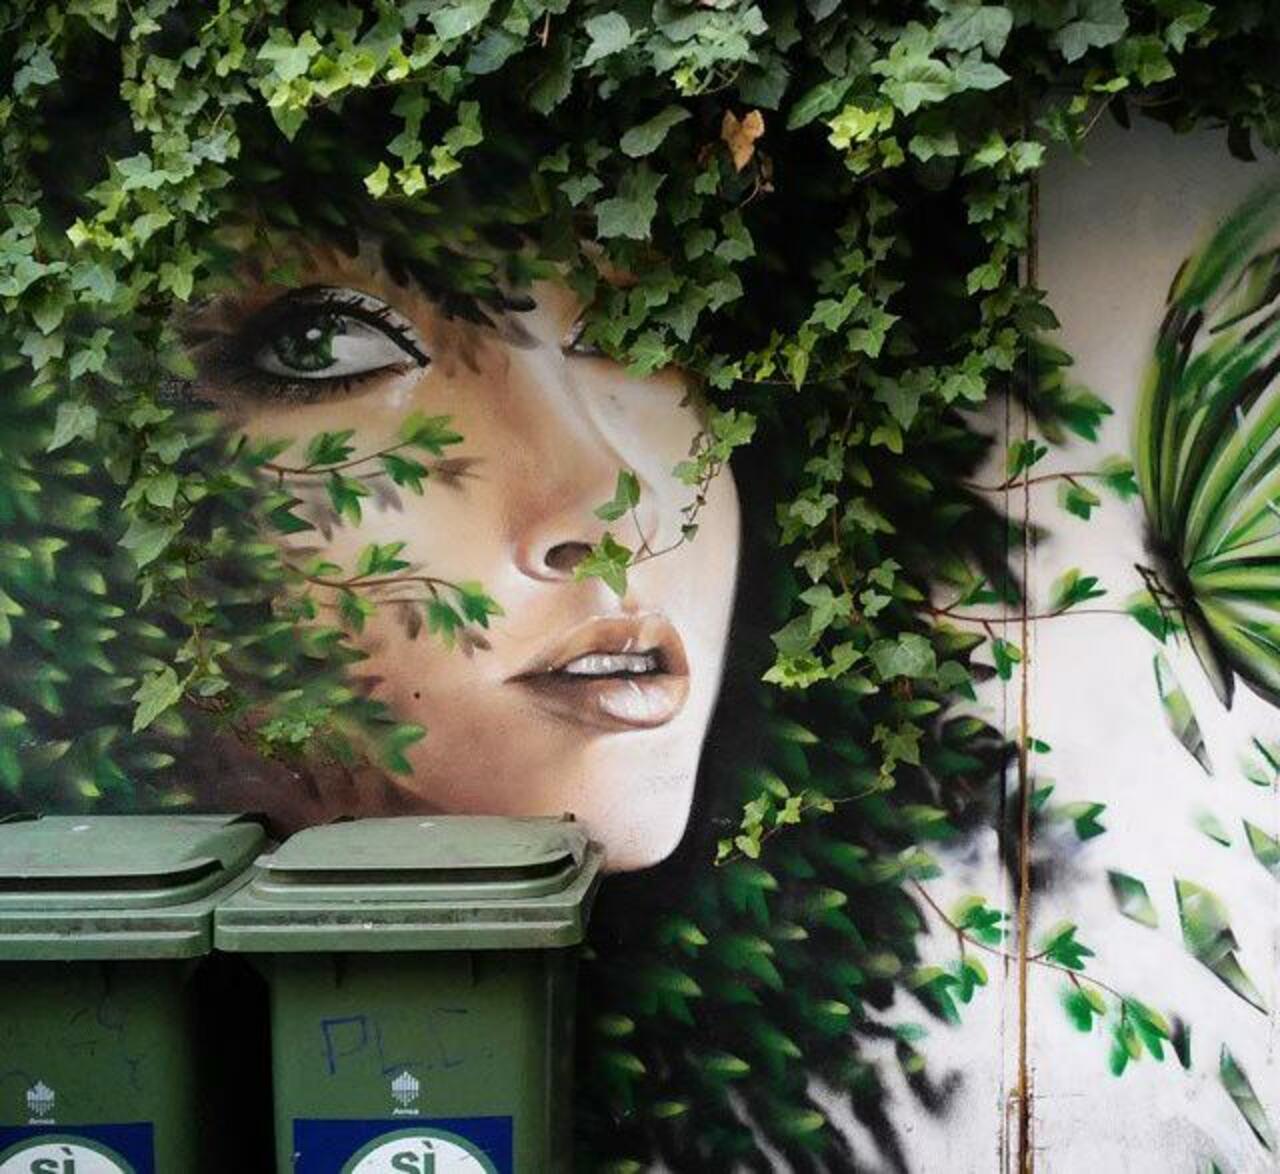 When Street Art meets nature by Dasxa in Isola, Millan 

#art #arte #graffiti #streetart http://t.co/5iP4MLp0qh